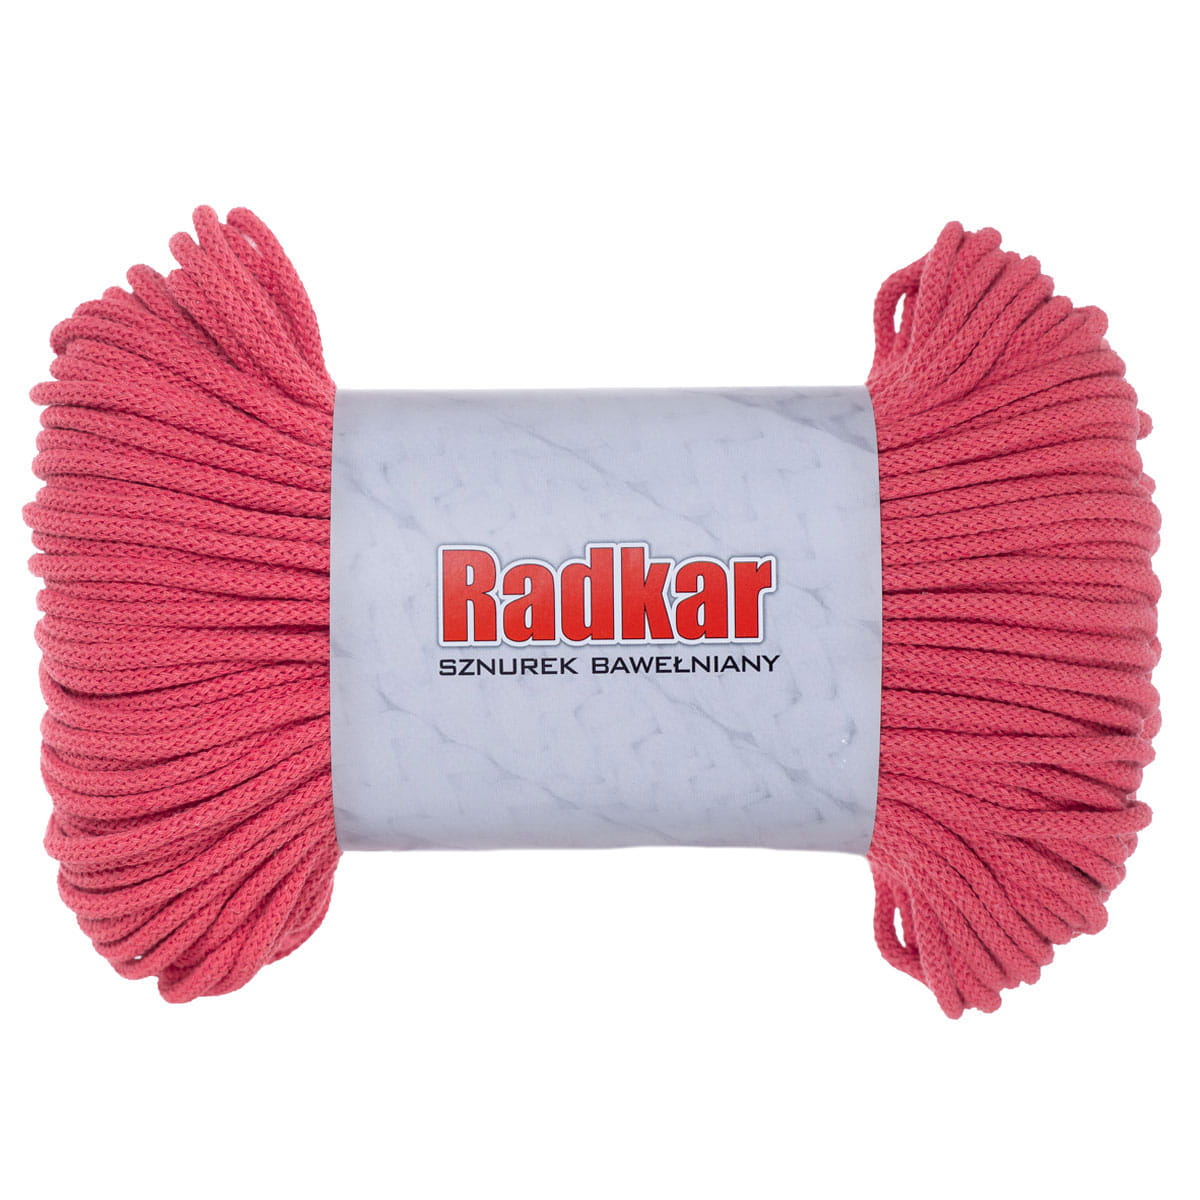 5mm braided cotton cord macrame crochet knitting craft radkar 